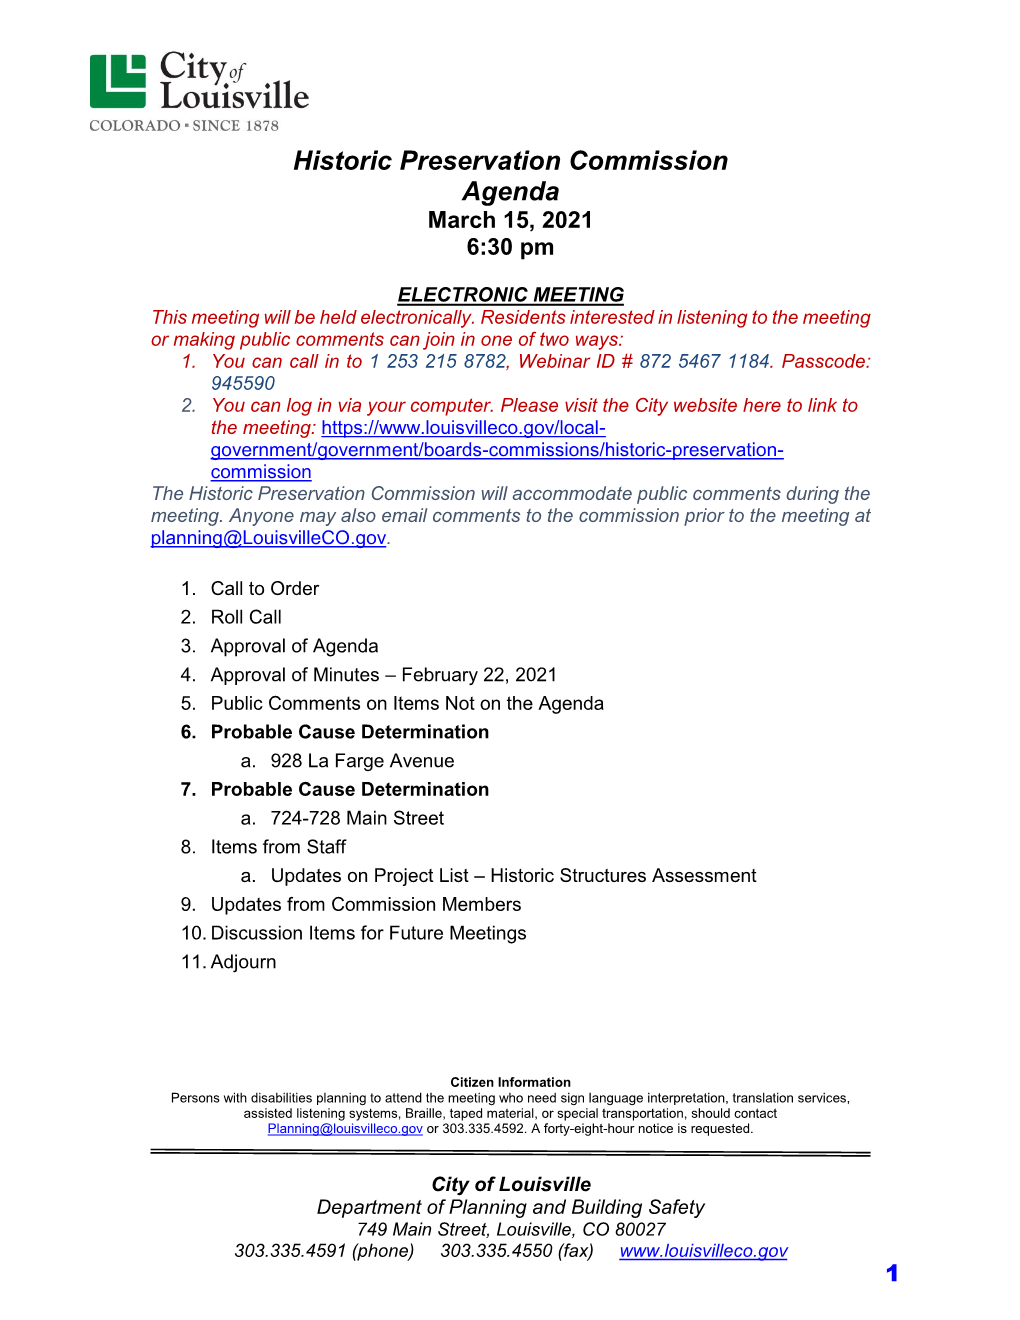 Historic Preservation Commission Agenda March 15, 2021 6:30 Pm